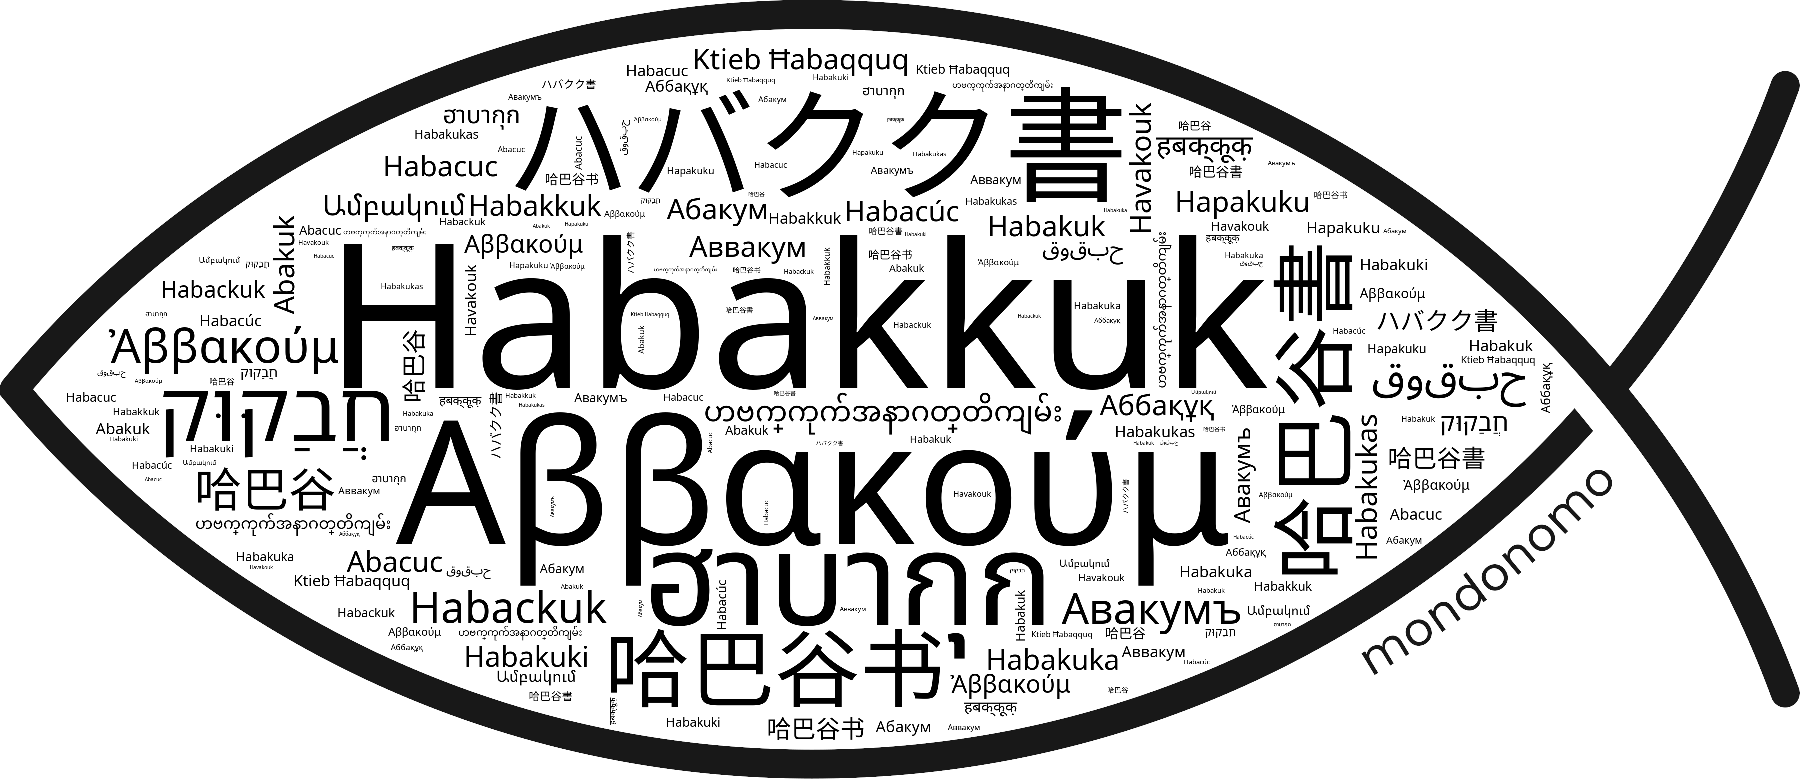 Name Habakkuk in the world's Bibles